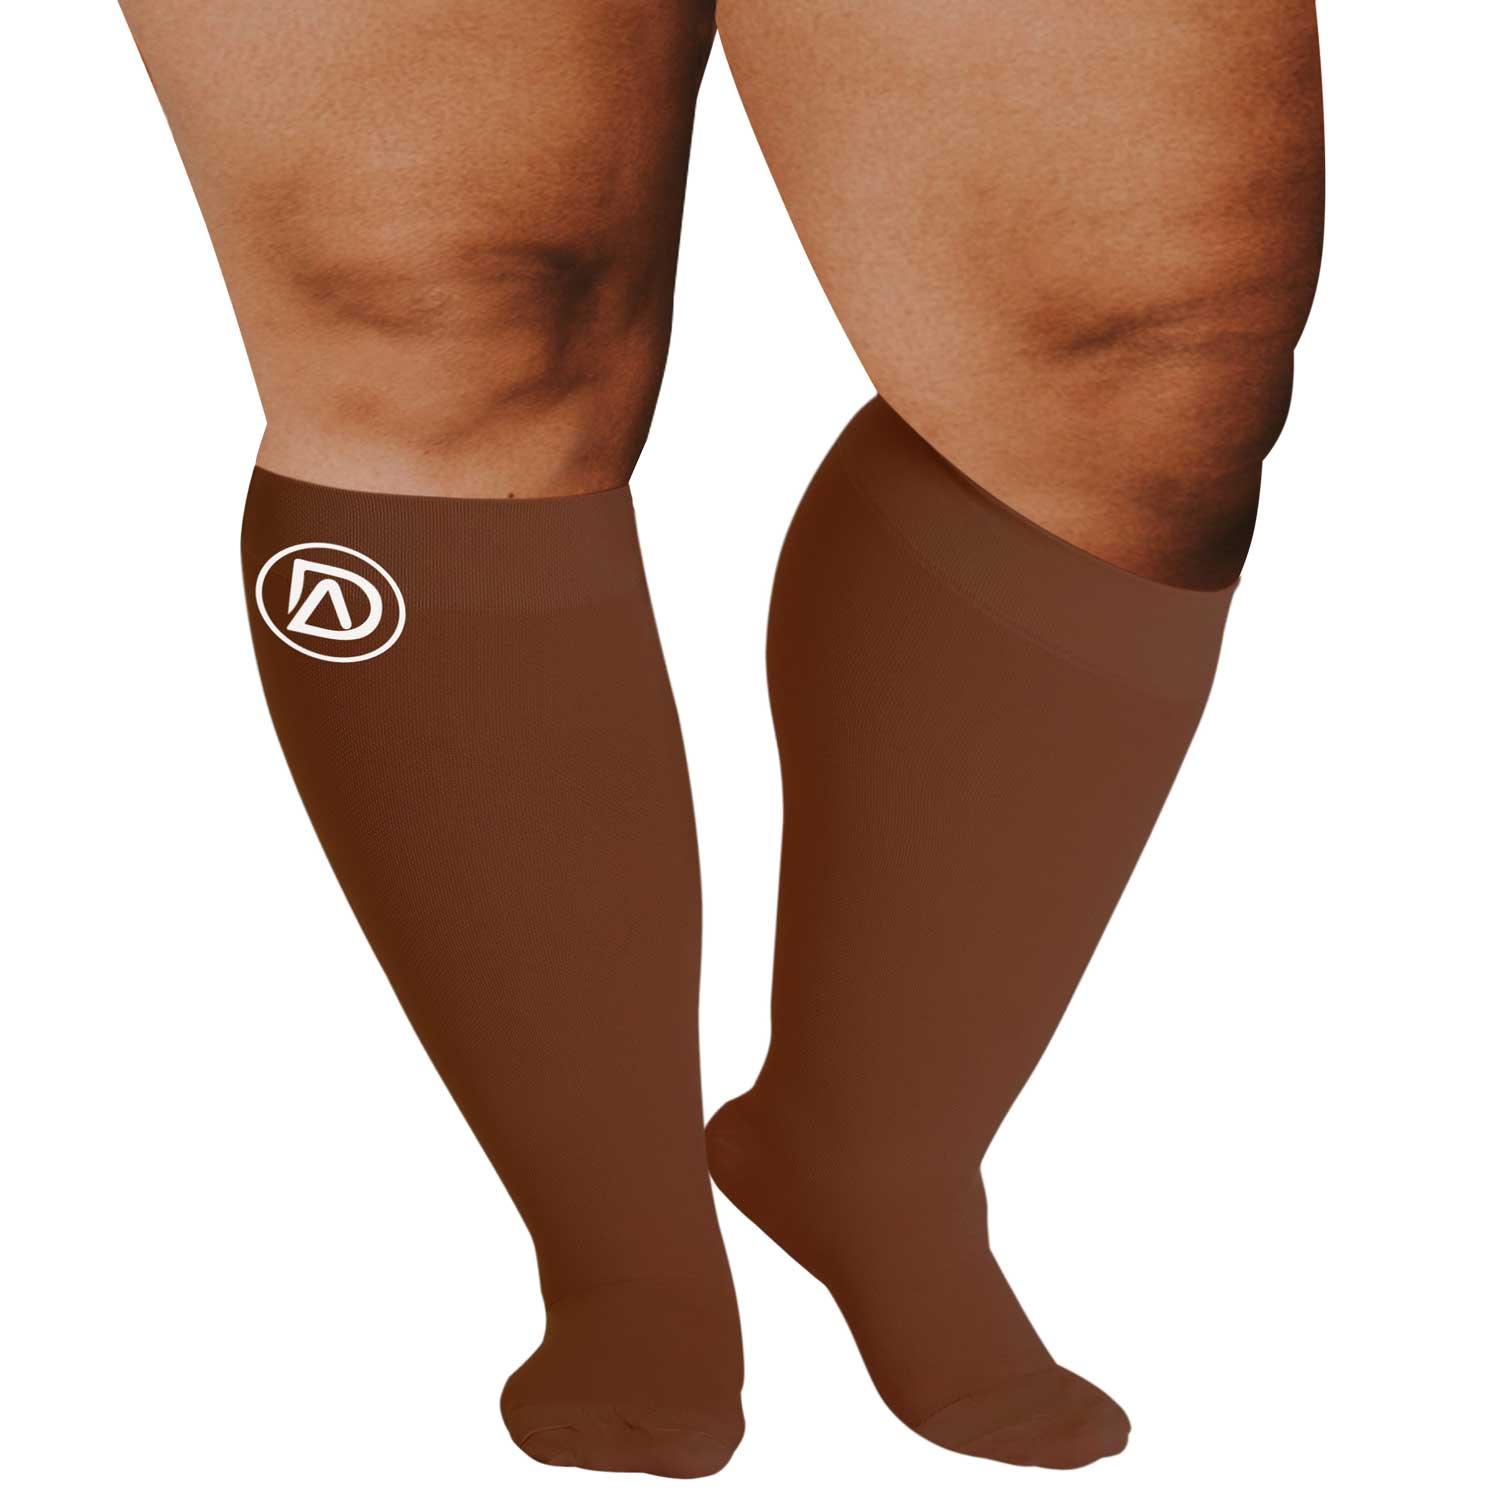 Rymora Unisex Adult Leg Compression Socks only $6.79